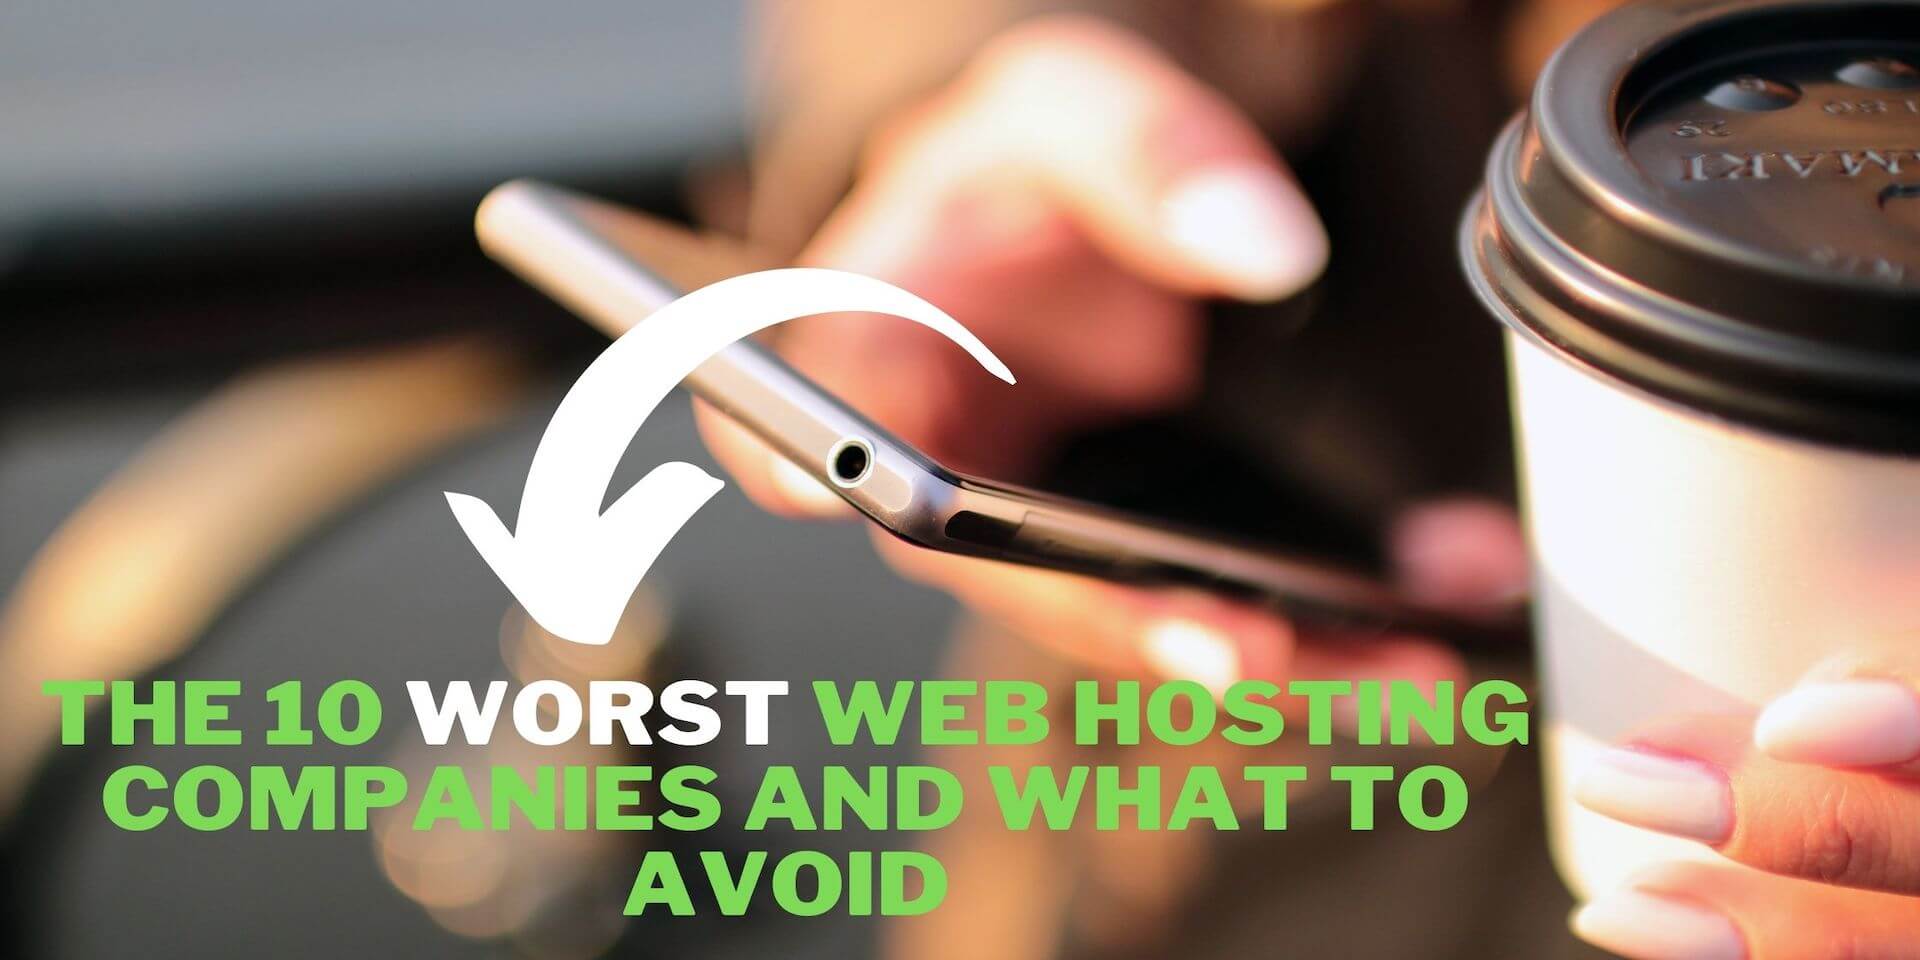 The 10 Worst Web Hosting Companies